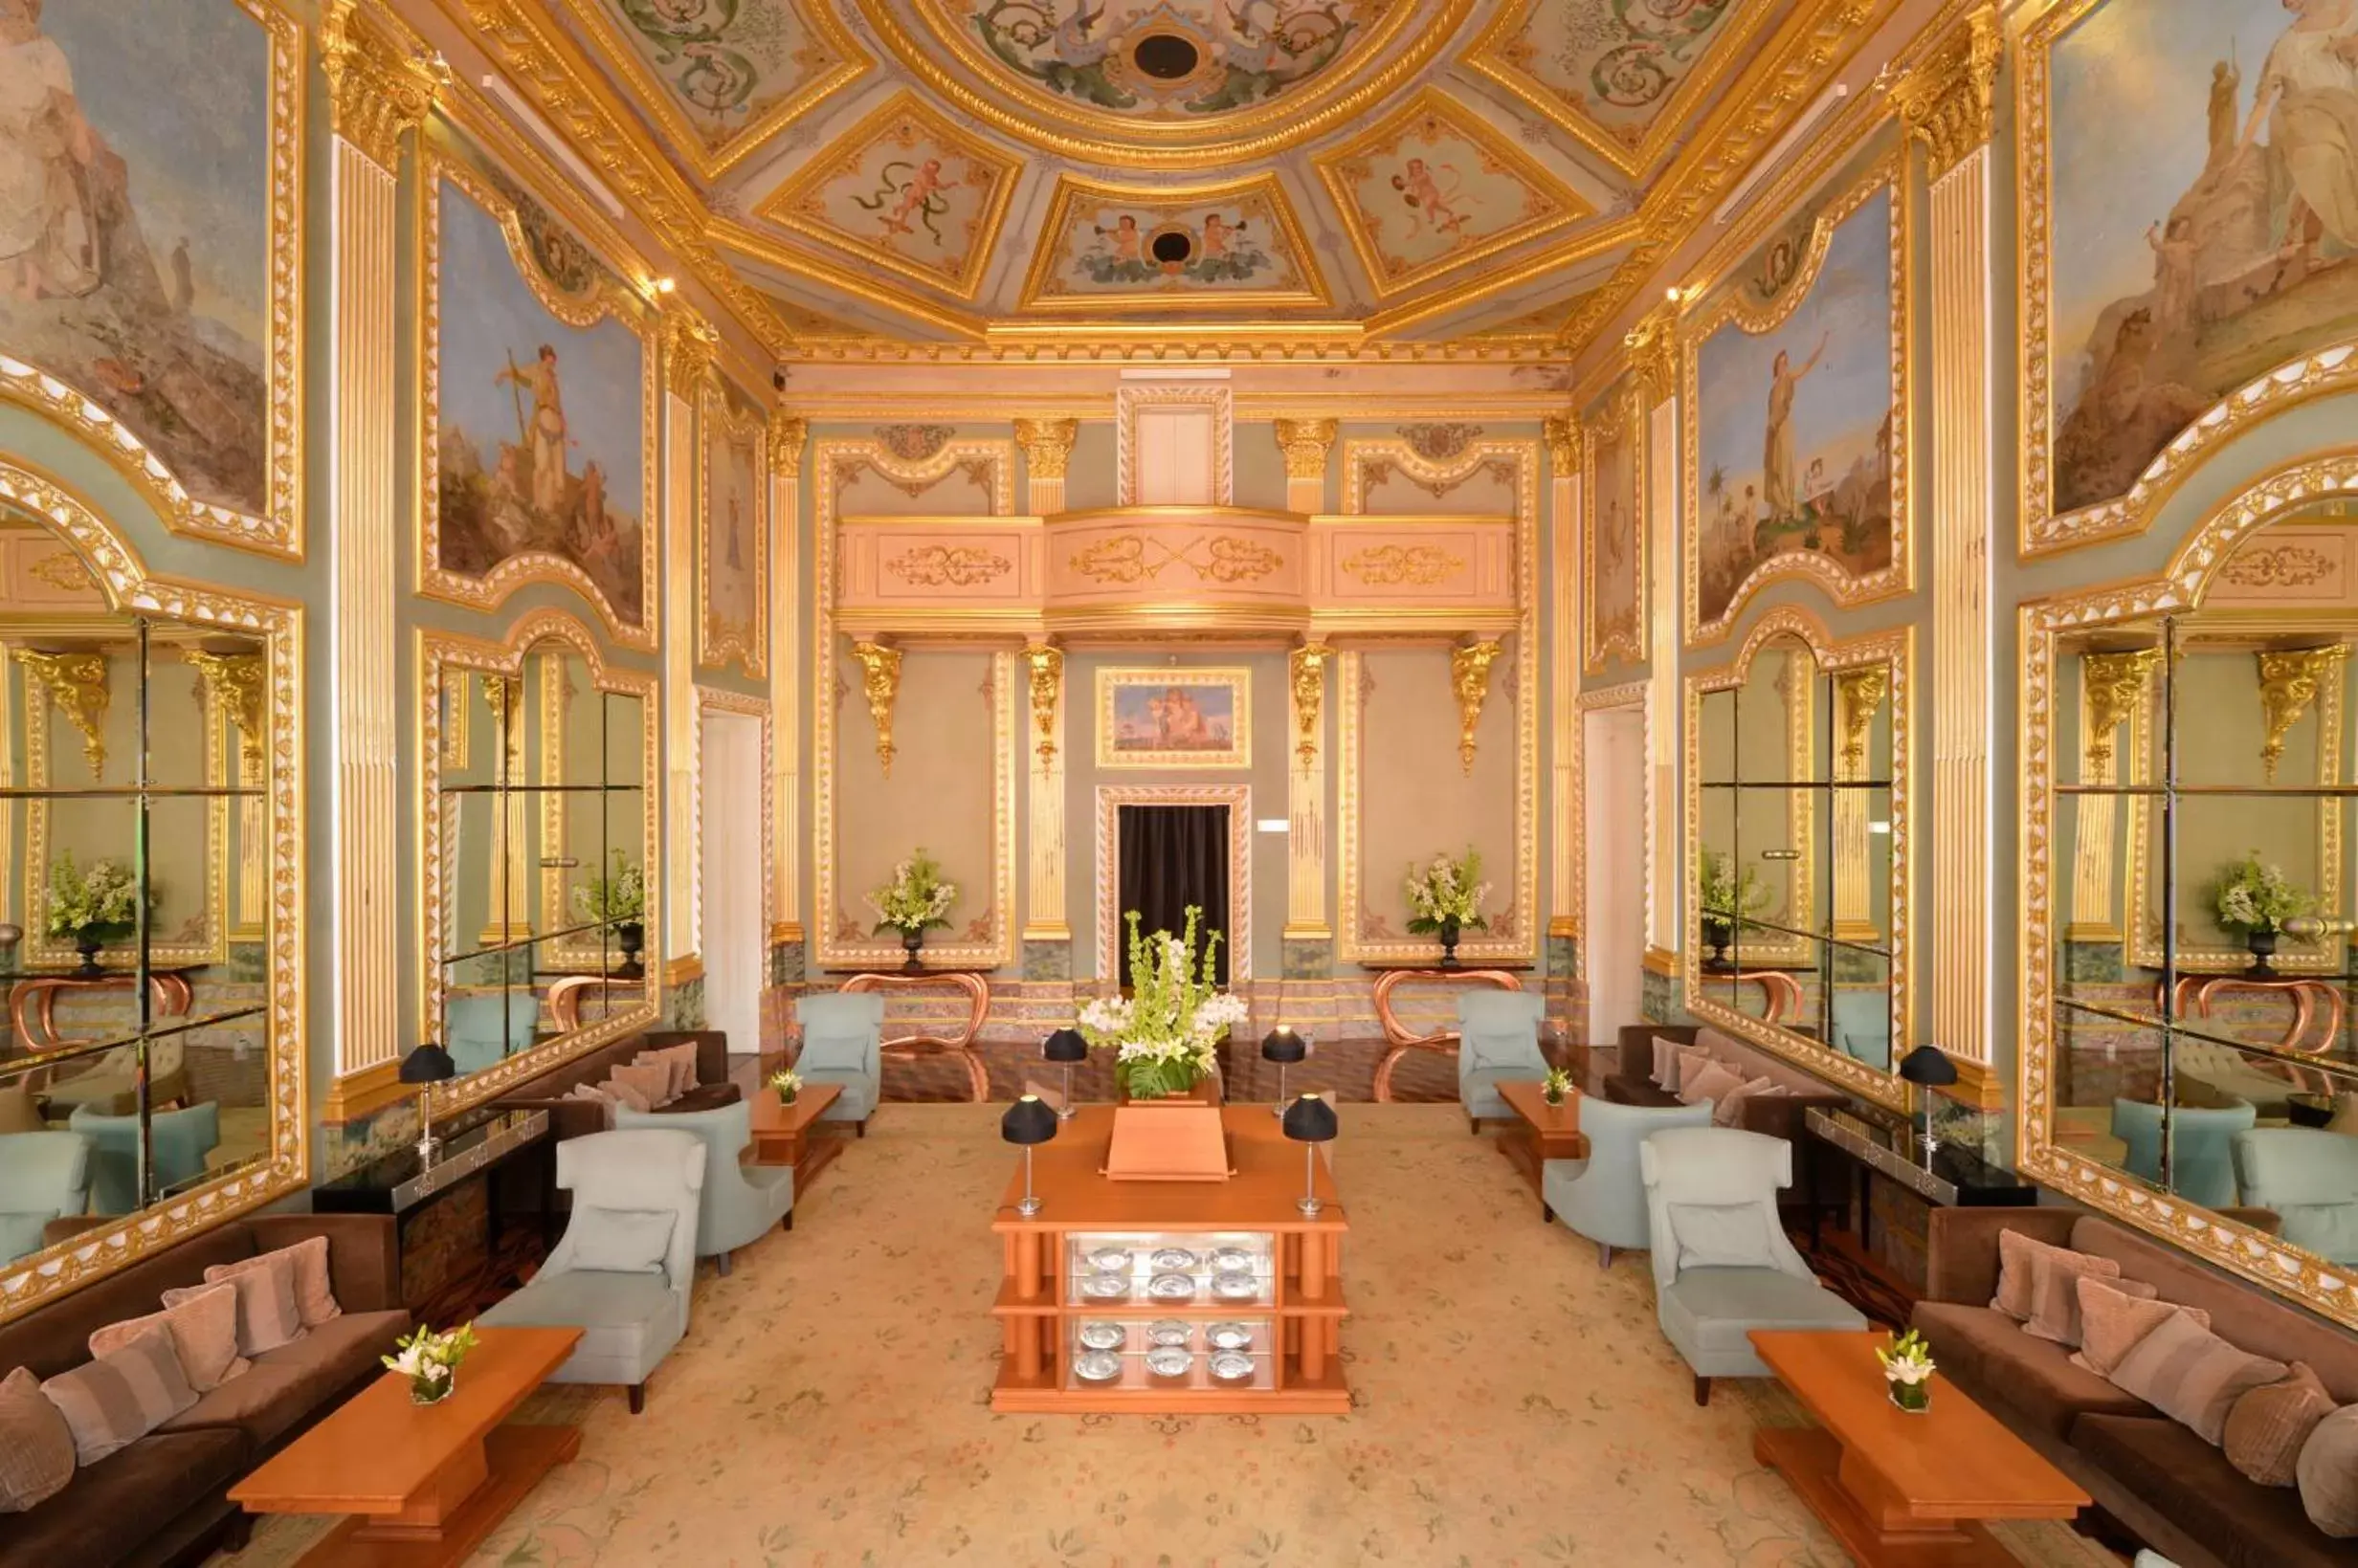 Lobby or reception in Pestana Palacio do Freixo, Pousada & National Monument - The Leading Hotels of the World